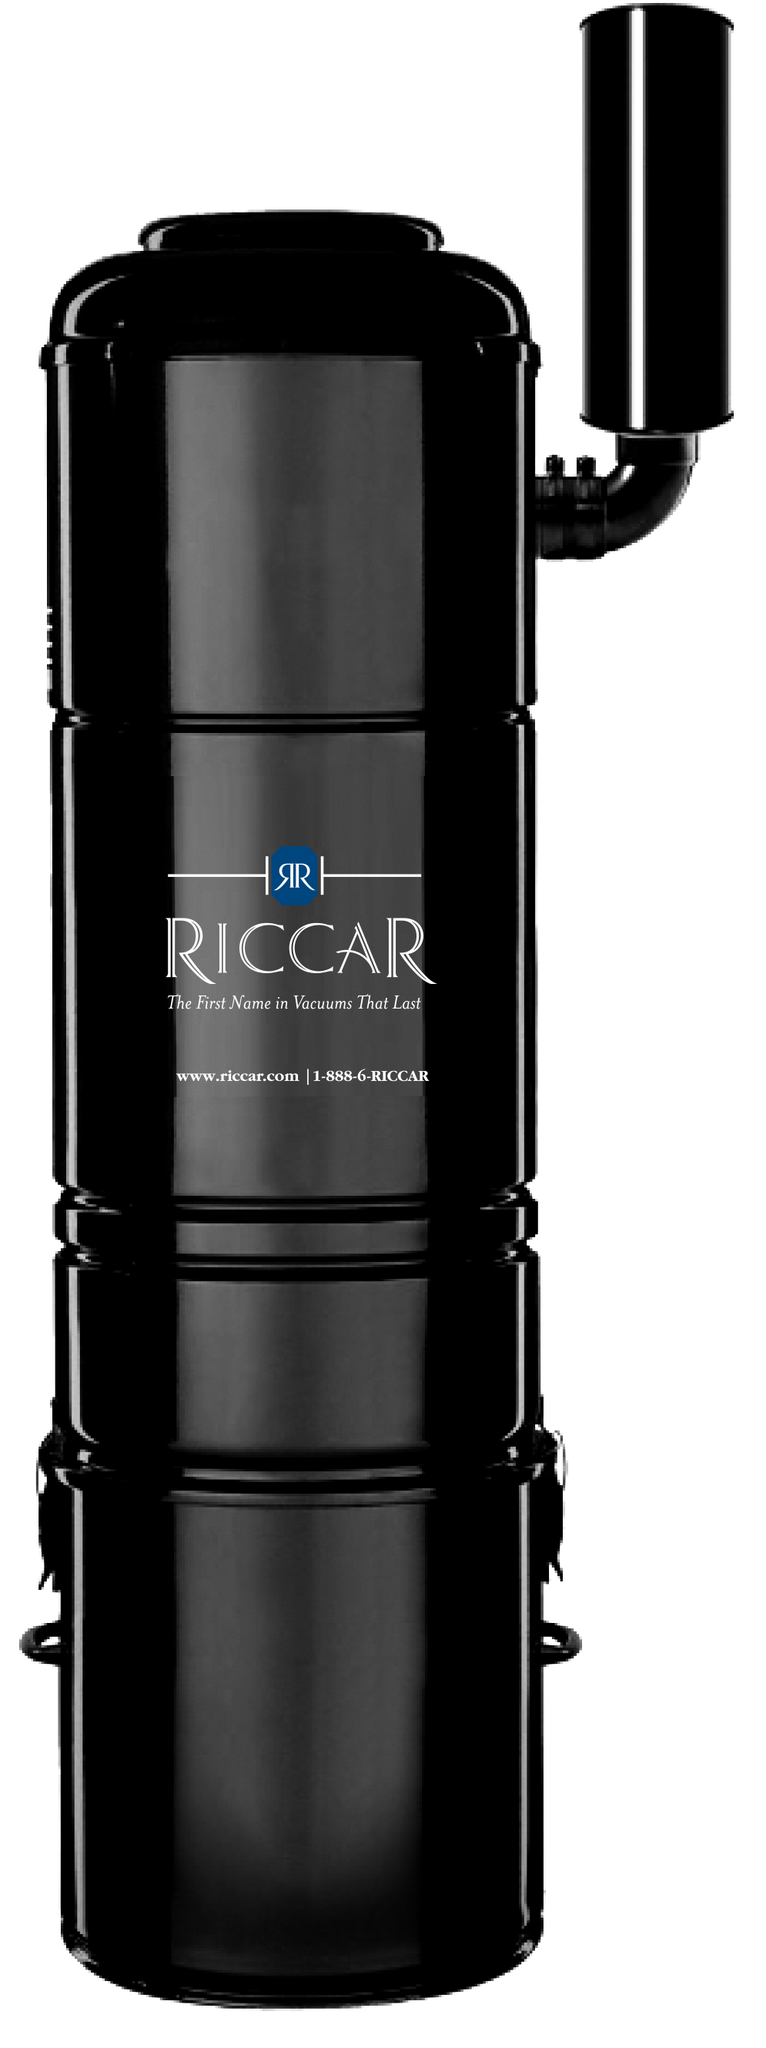 Riccar Standard Hybrid Central Vacuum Cleaner (RCU-H5)